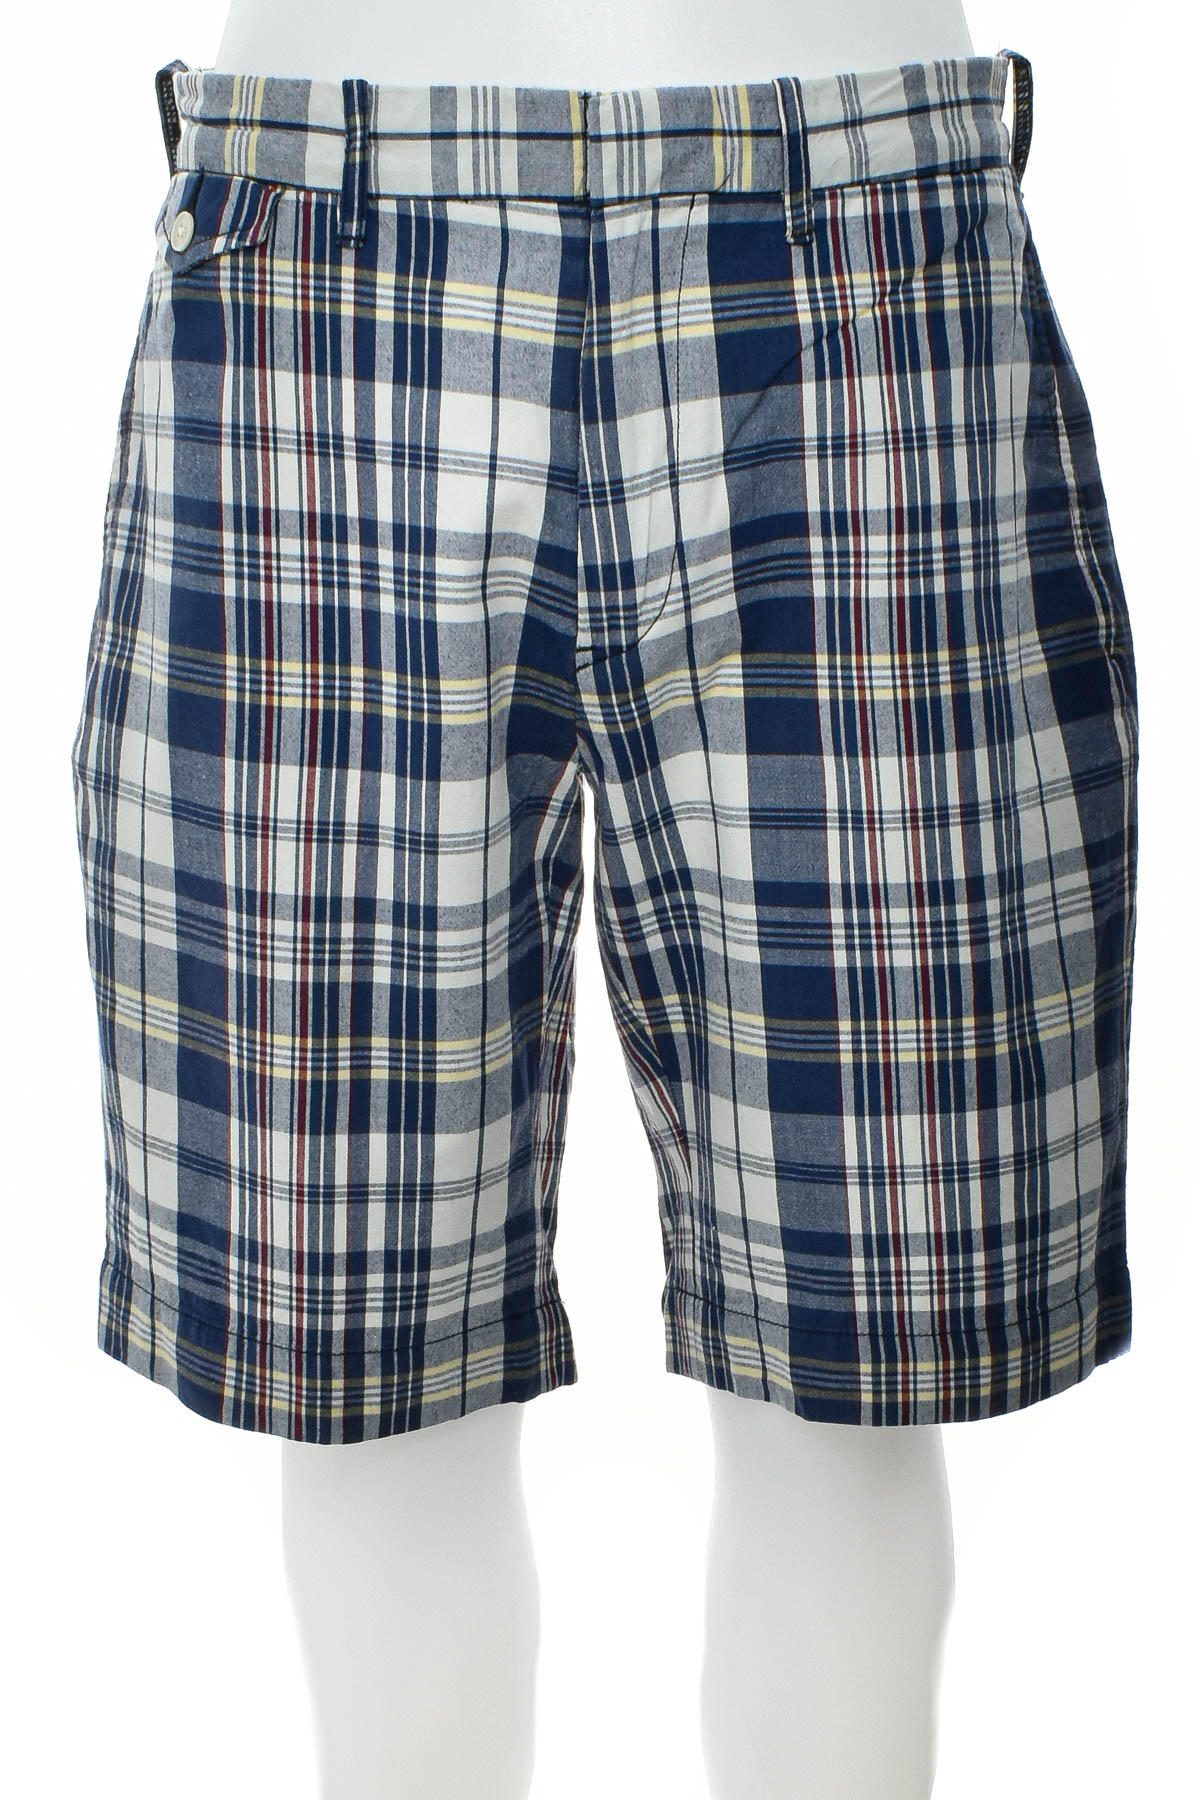 Pantaloni scurți bărbați - Polo by Ralph Lauren - 0